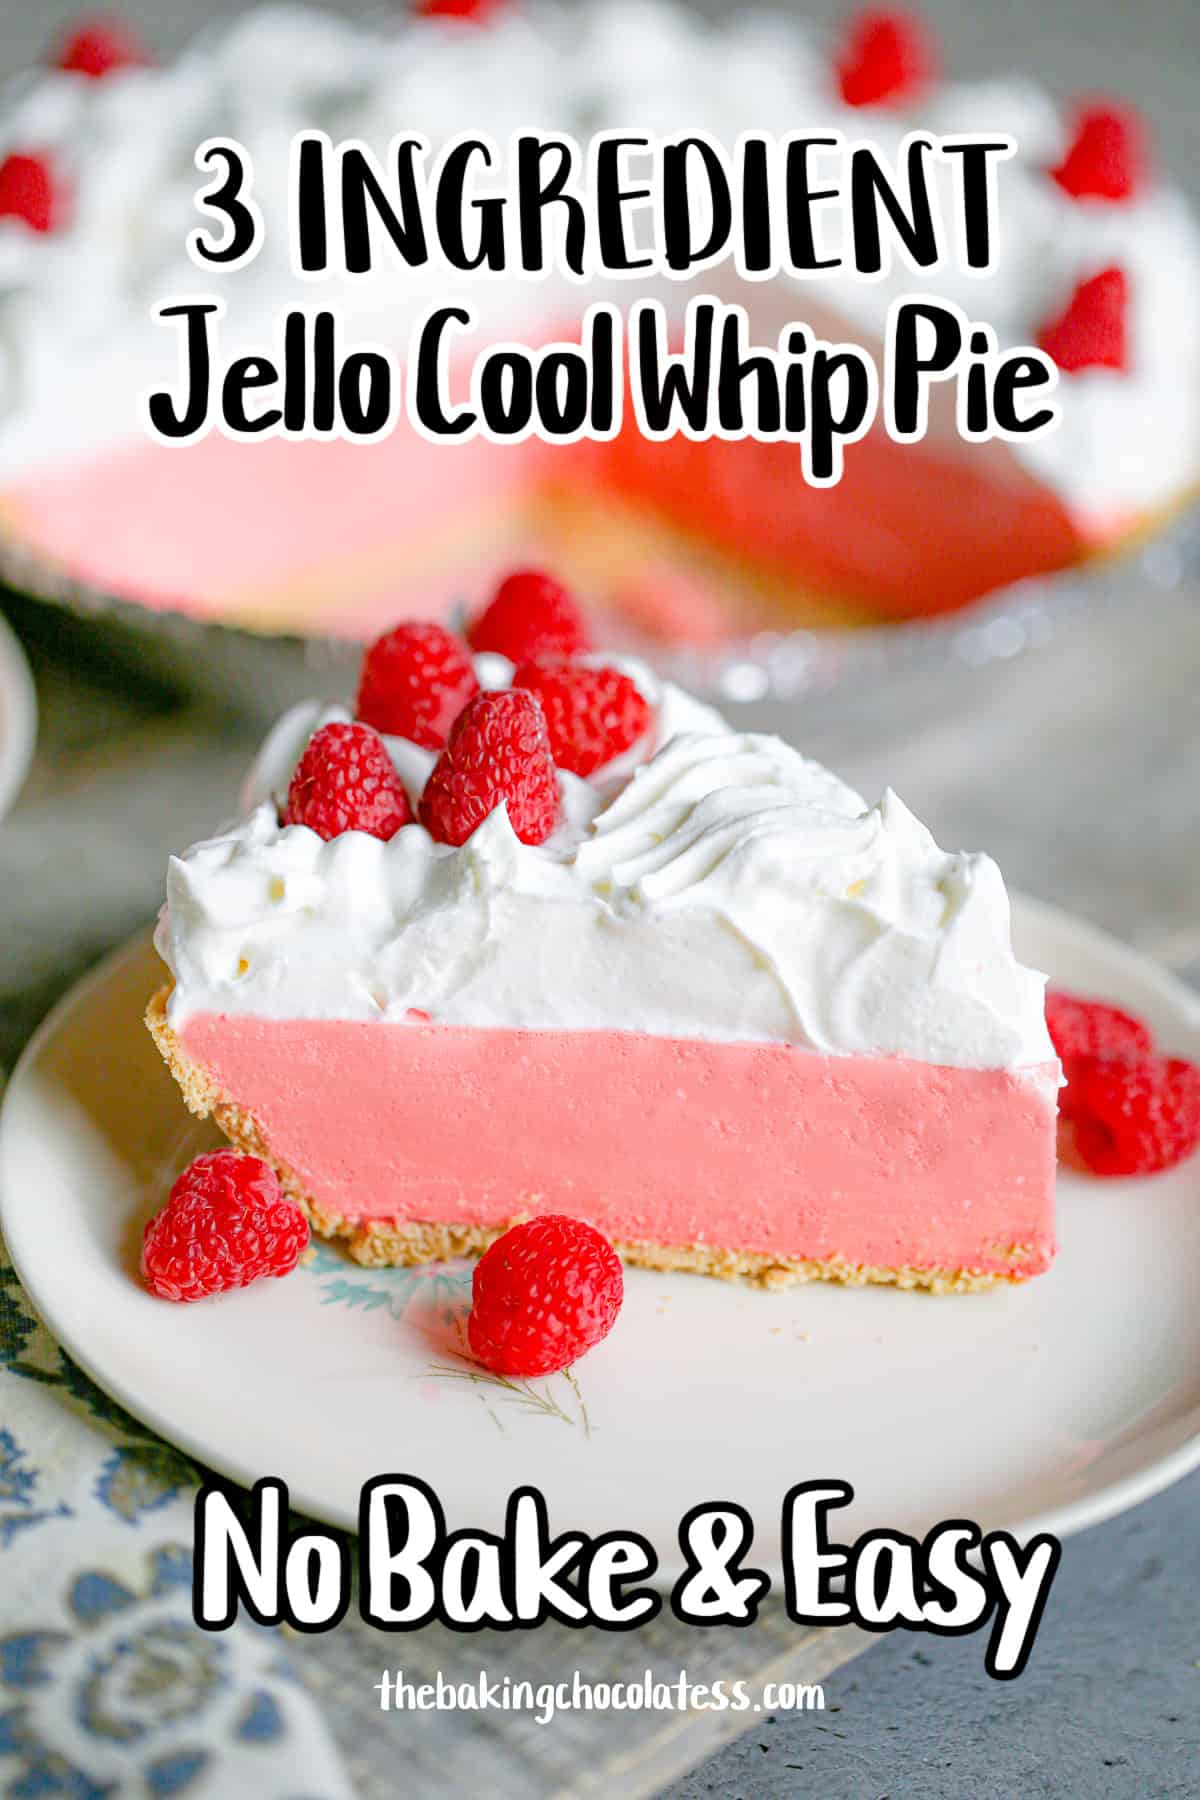 jello cool whip pie